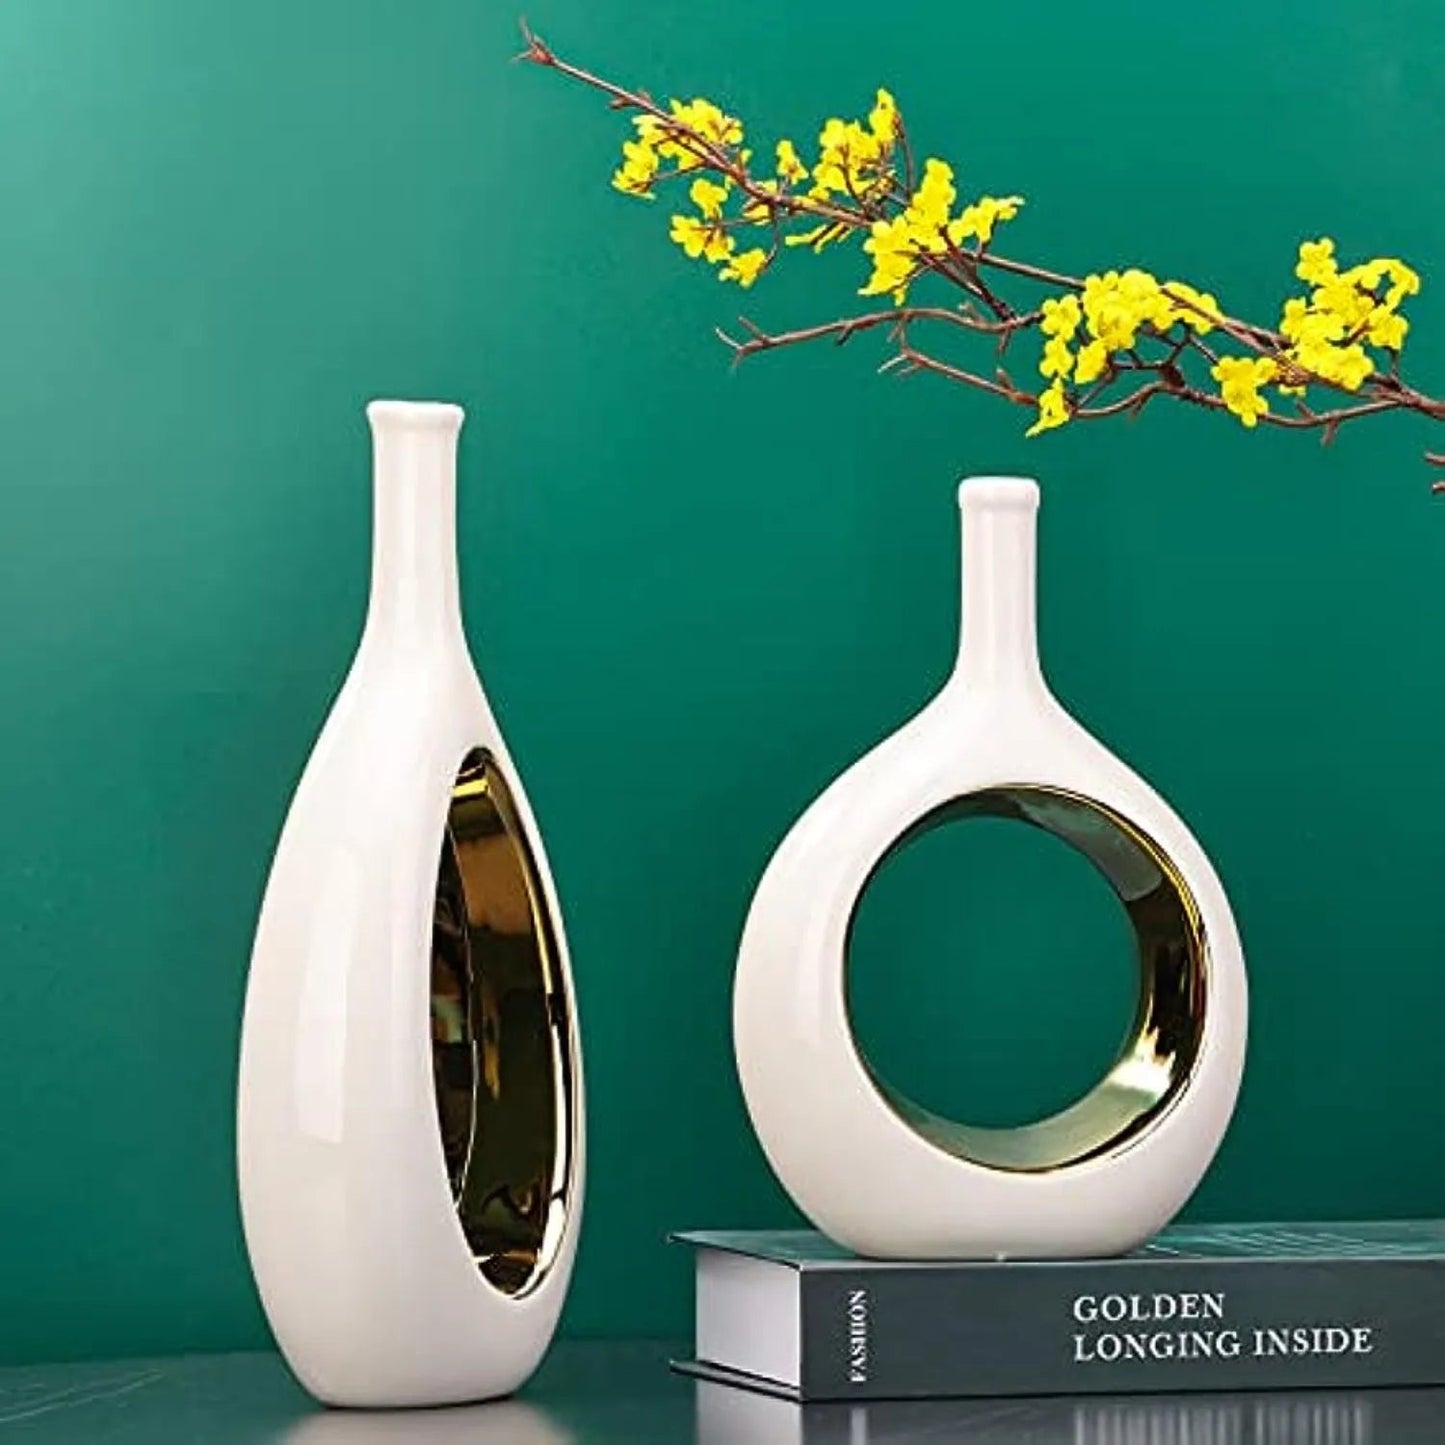 2pc White and Gold Vase Ceramic Home DecorModern Minimalist Circle Decorative Vase, Hollow Ellipse Flower vases Centerpieces acacuss